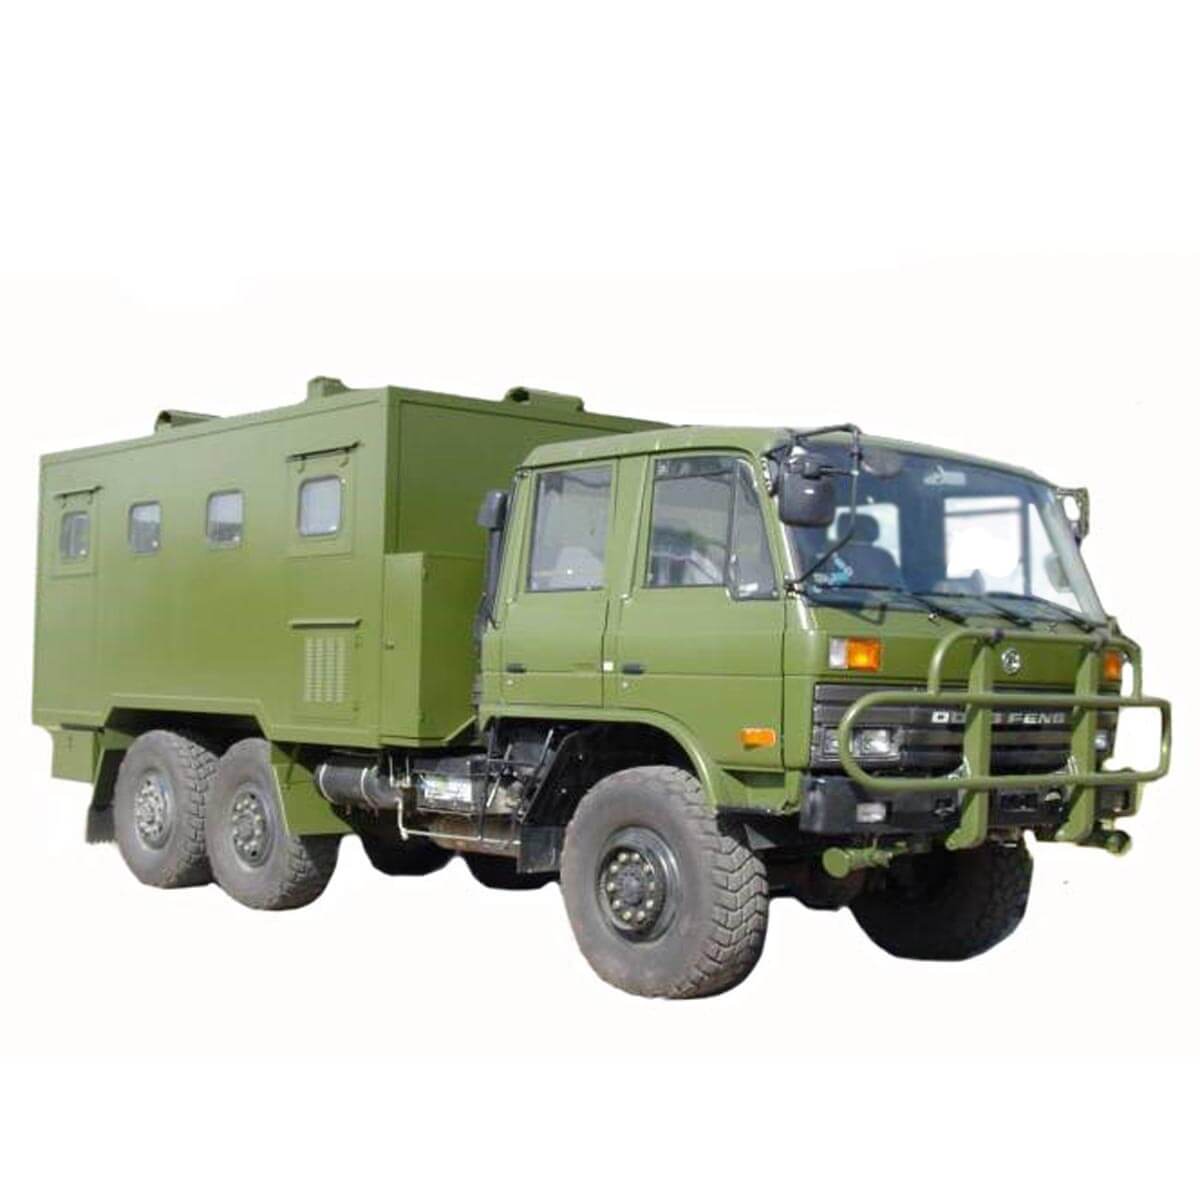 Military Kitchen Truck 6x6 Offorad Customizing 